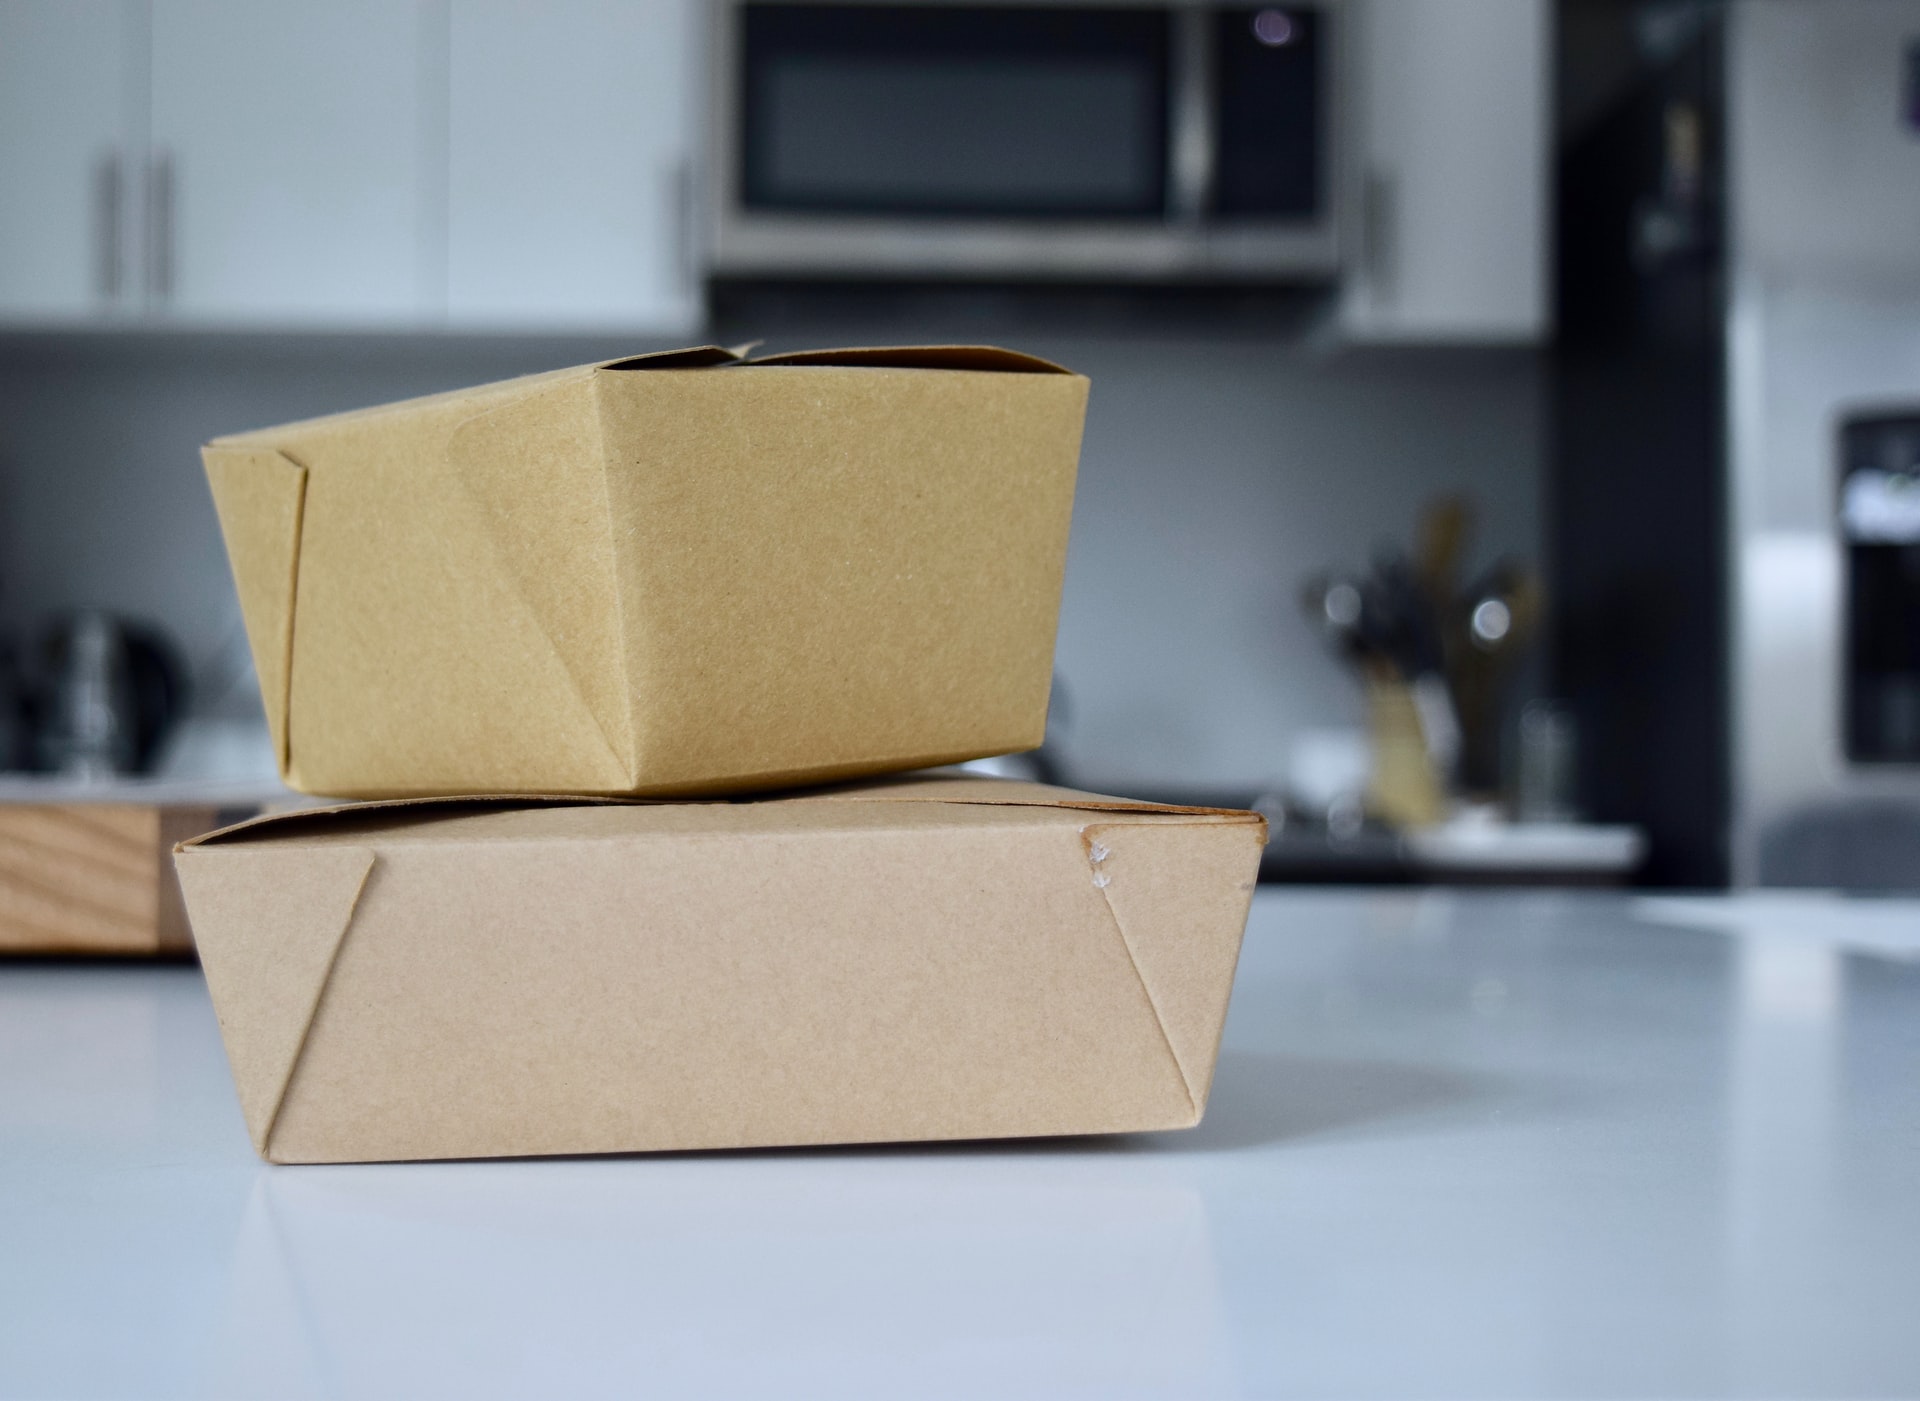 Ways to Reuse Takeaway Boxes